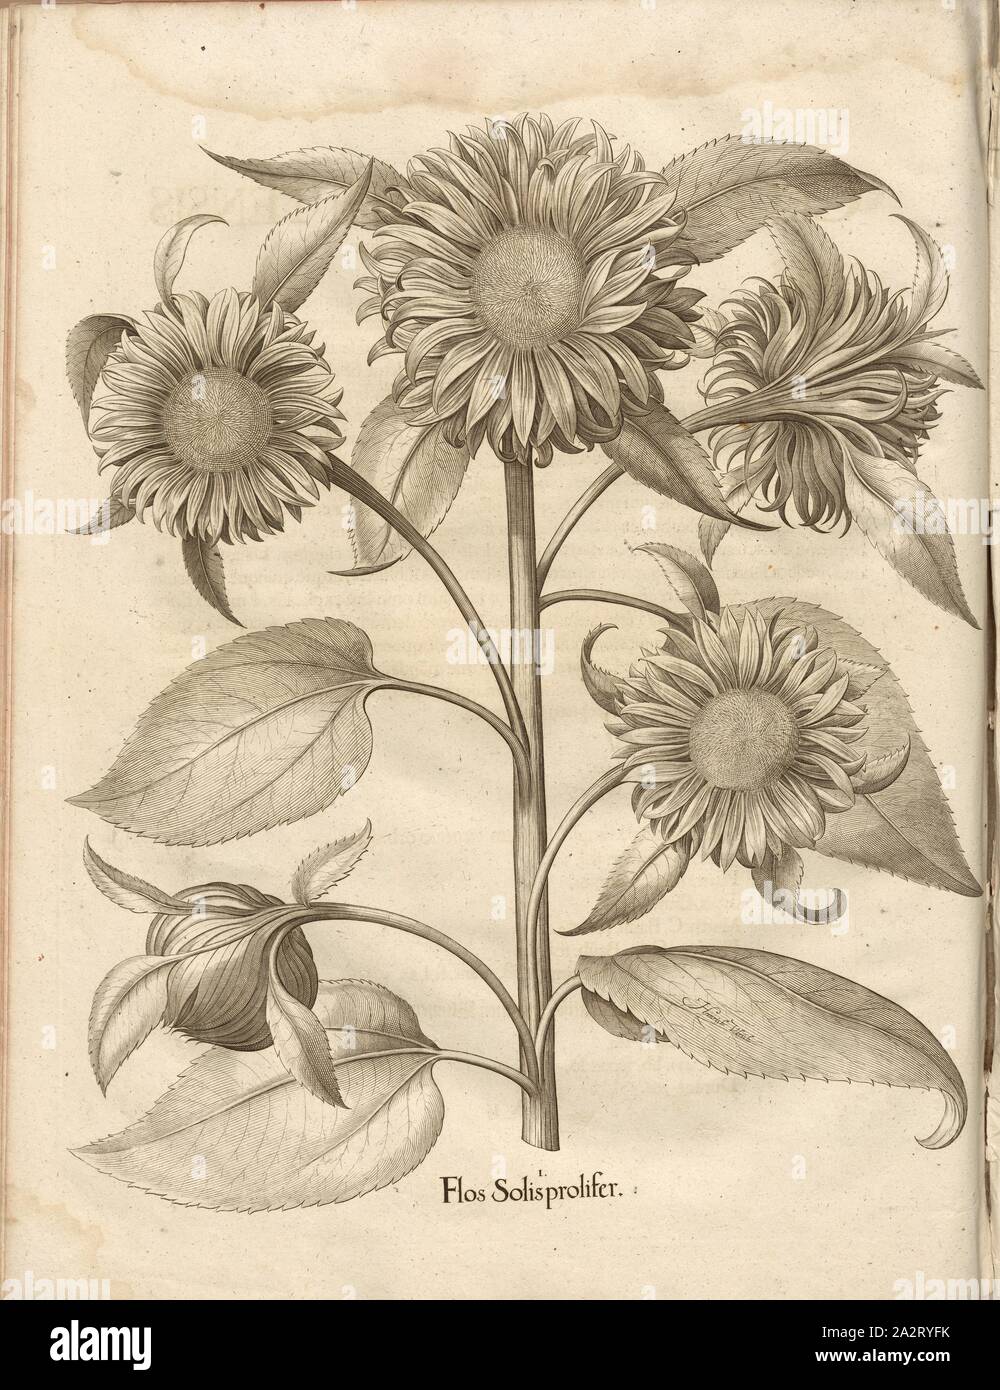 Flos Solis prolifer, Sunflower, Copper Engraving, p. 452, Besler, Basilius; Jungermann, Ludwig, 1713, Basilius Besler: Hortus Eystettensis (...). Nürnberg, 1713 Stock Photo